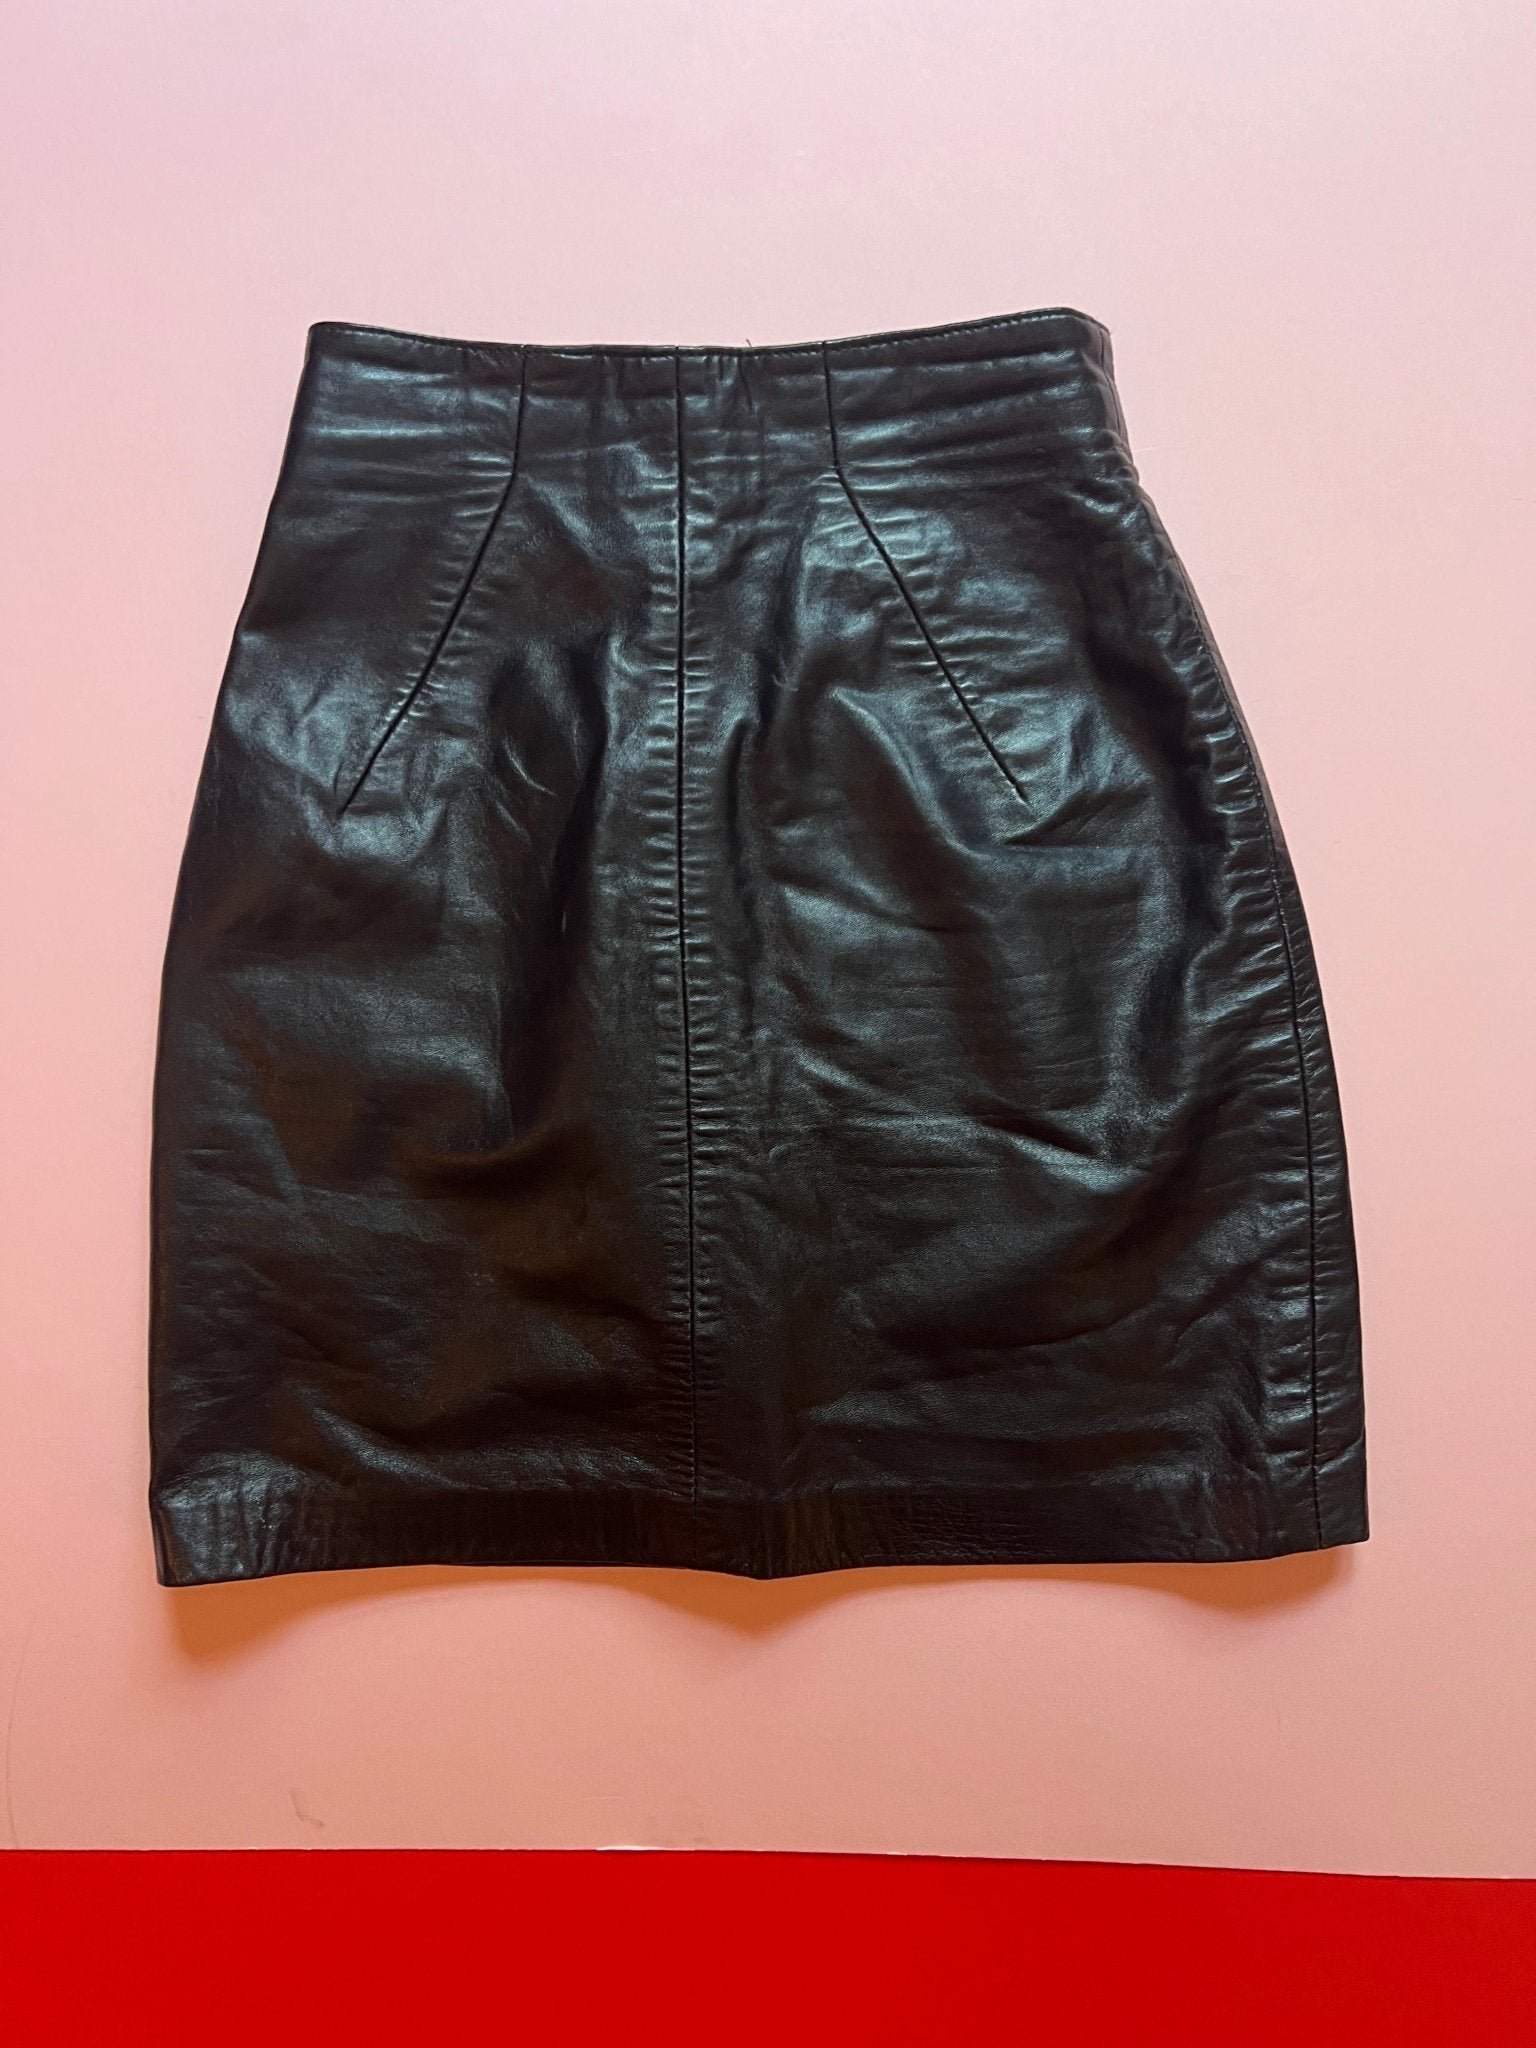 Michael Hoban North Beach black leather skirt - The Nightshift